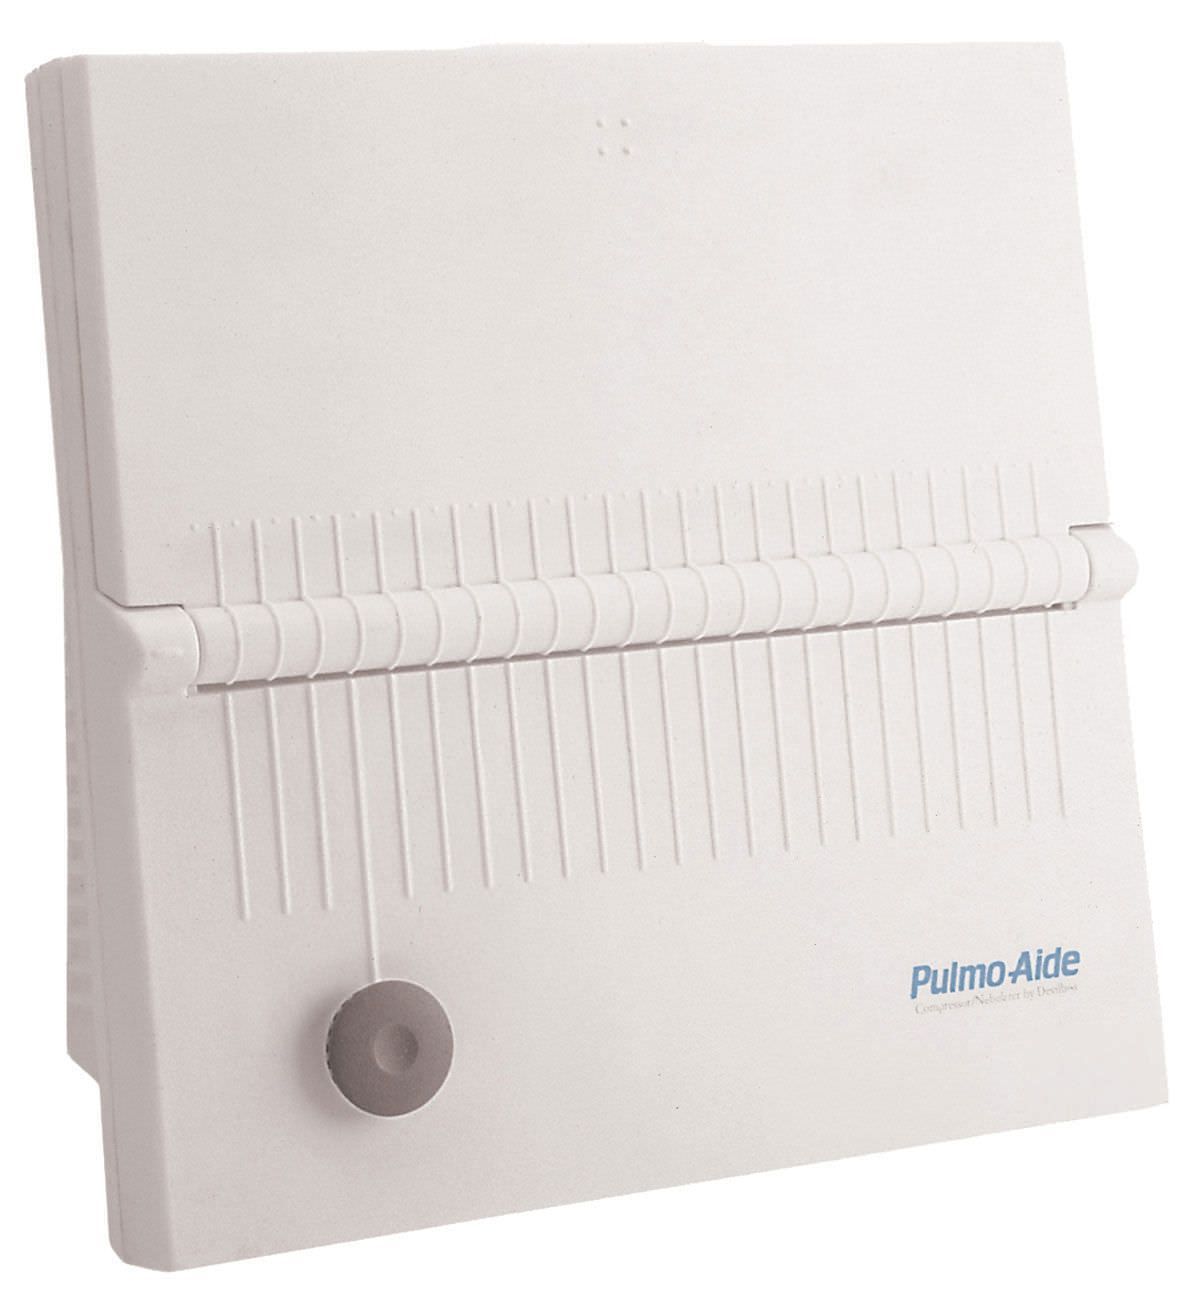 Pneumatic nebulizer / with compressor min 9 L/mn | Pulmo-Aide® DeVilbiss Healthcare